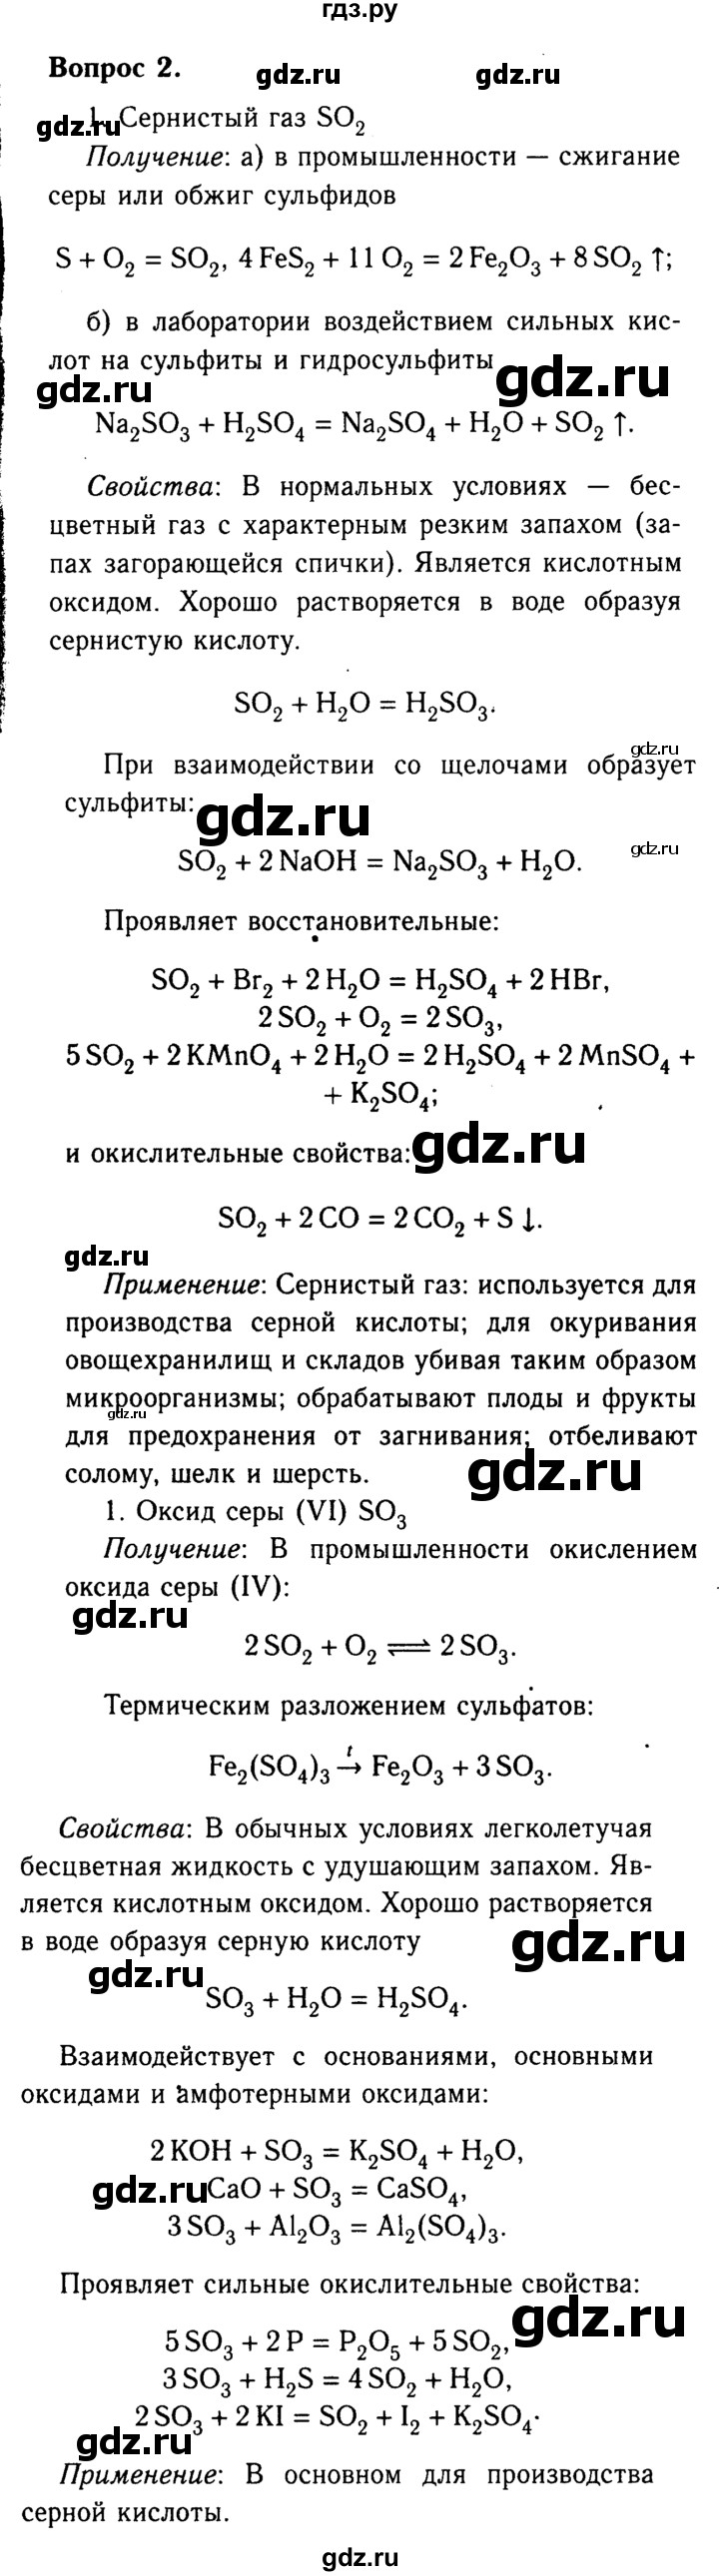 ГДЗ по химии 9 класс  Габриелян   §23 - 2, Решебник 2